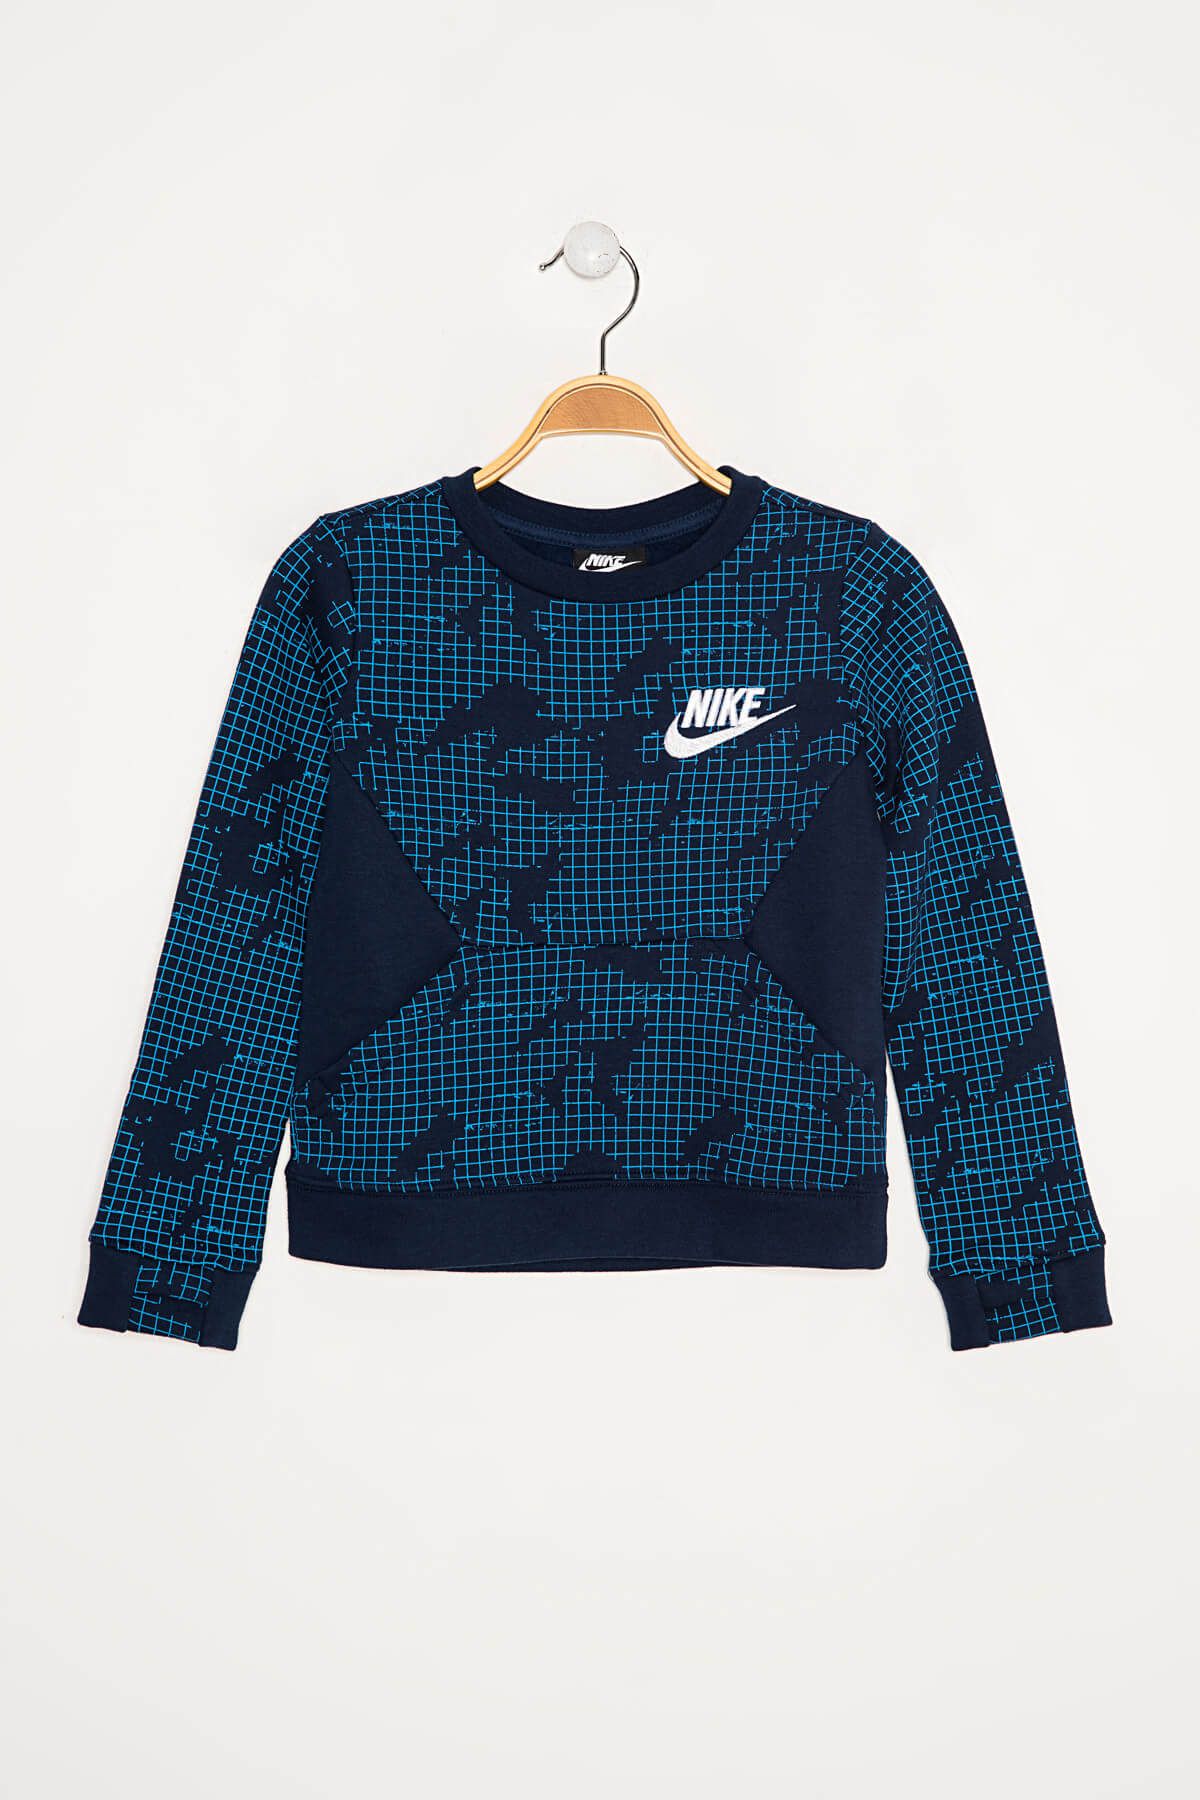 Nike Mavi Unisex Çocuk Sweatshirt